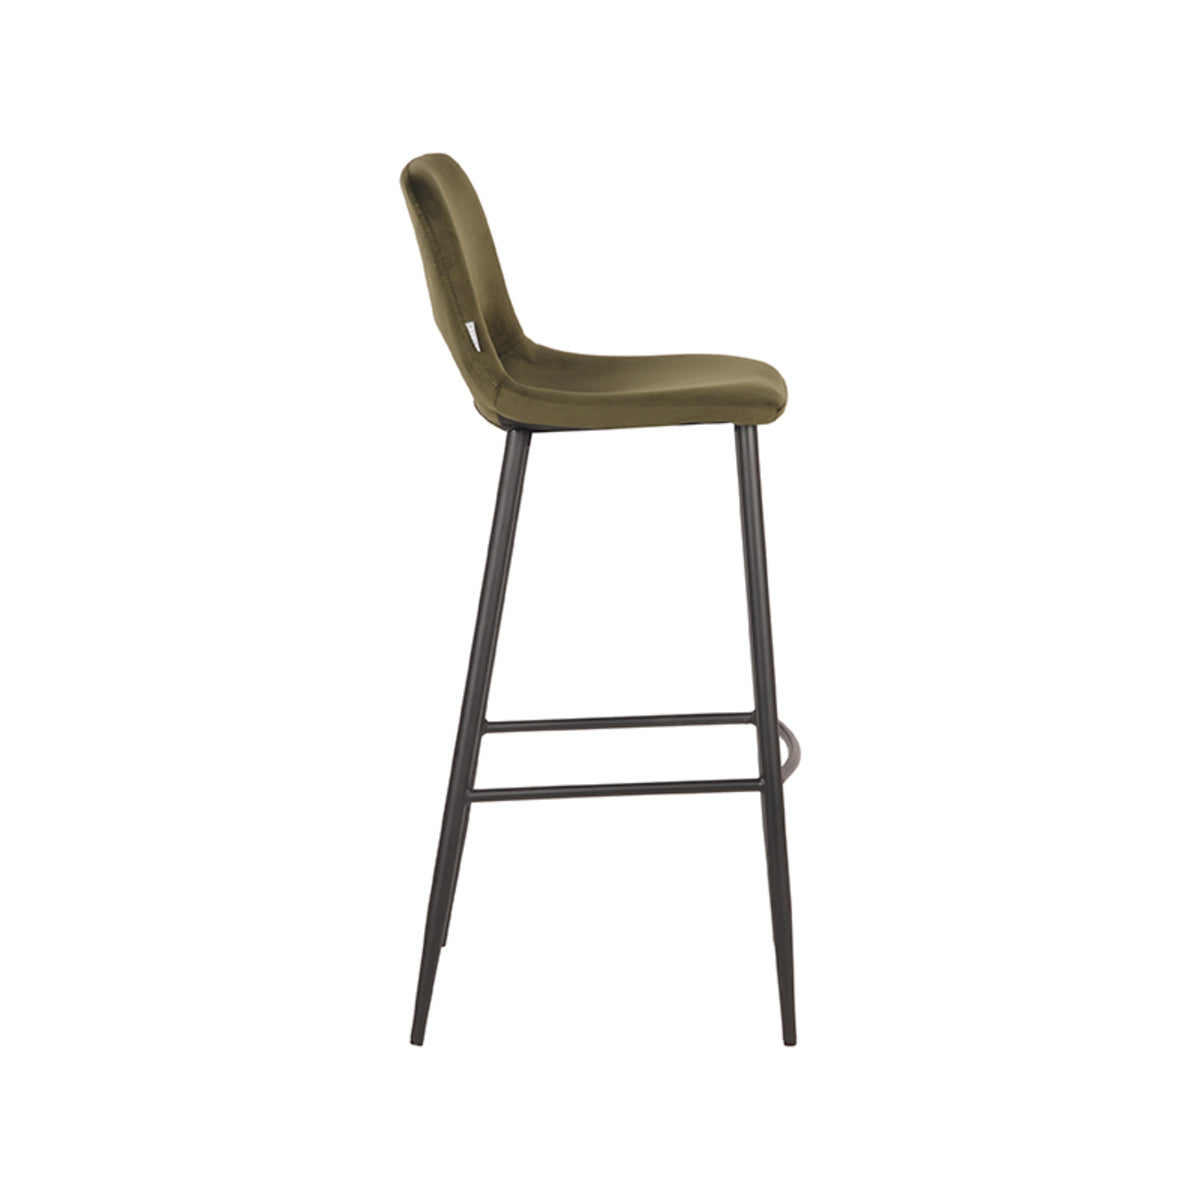 LABEL51 Bar stool Josh - Army green - Velvet - Seat height 78 |